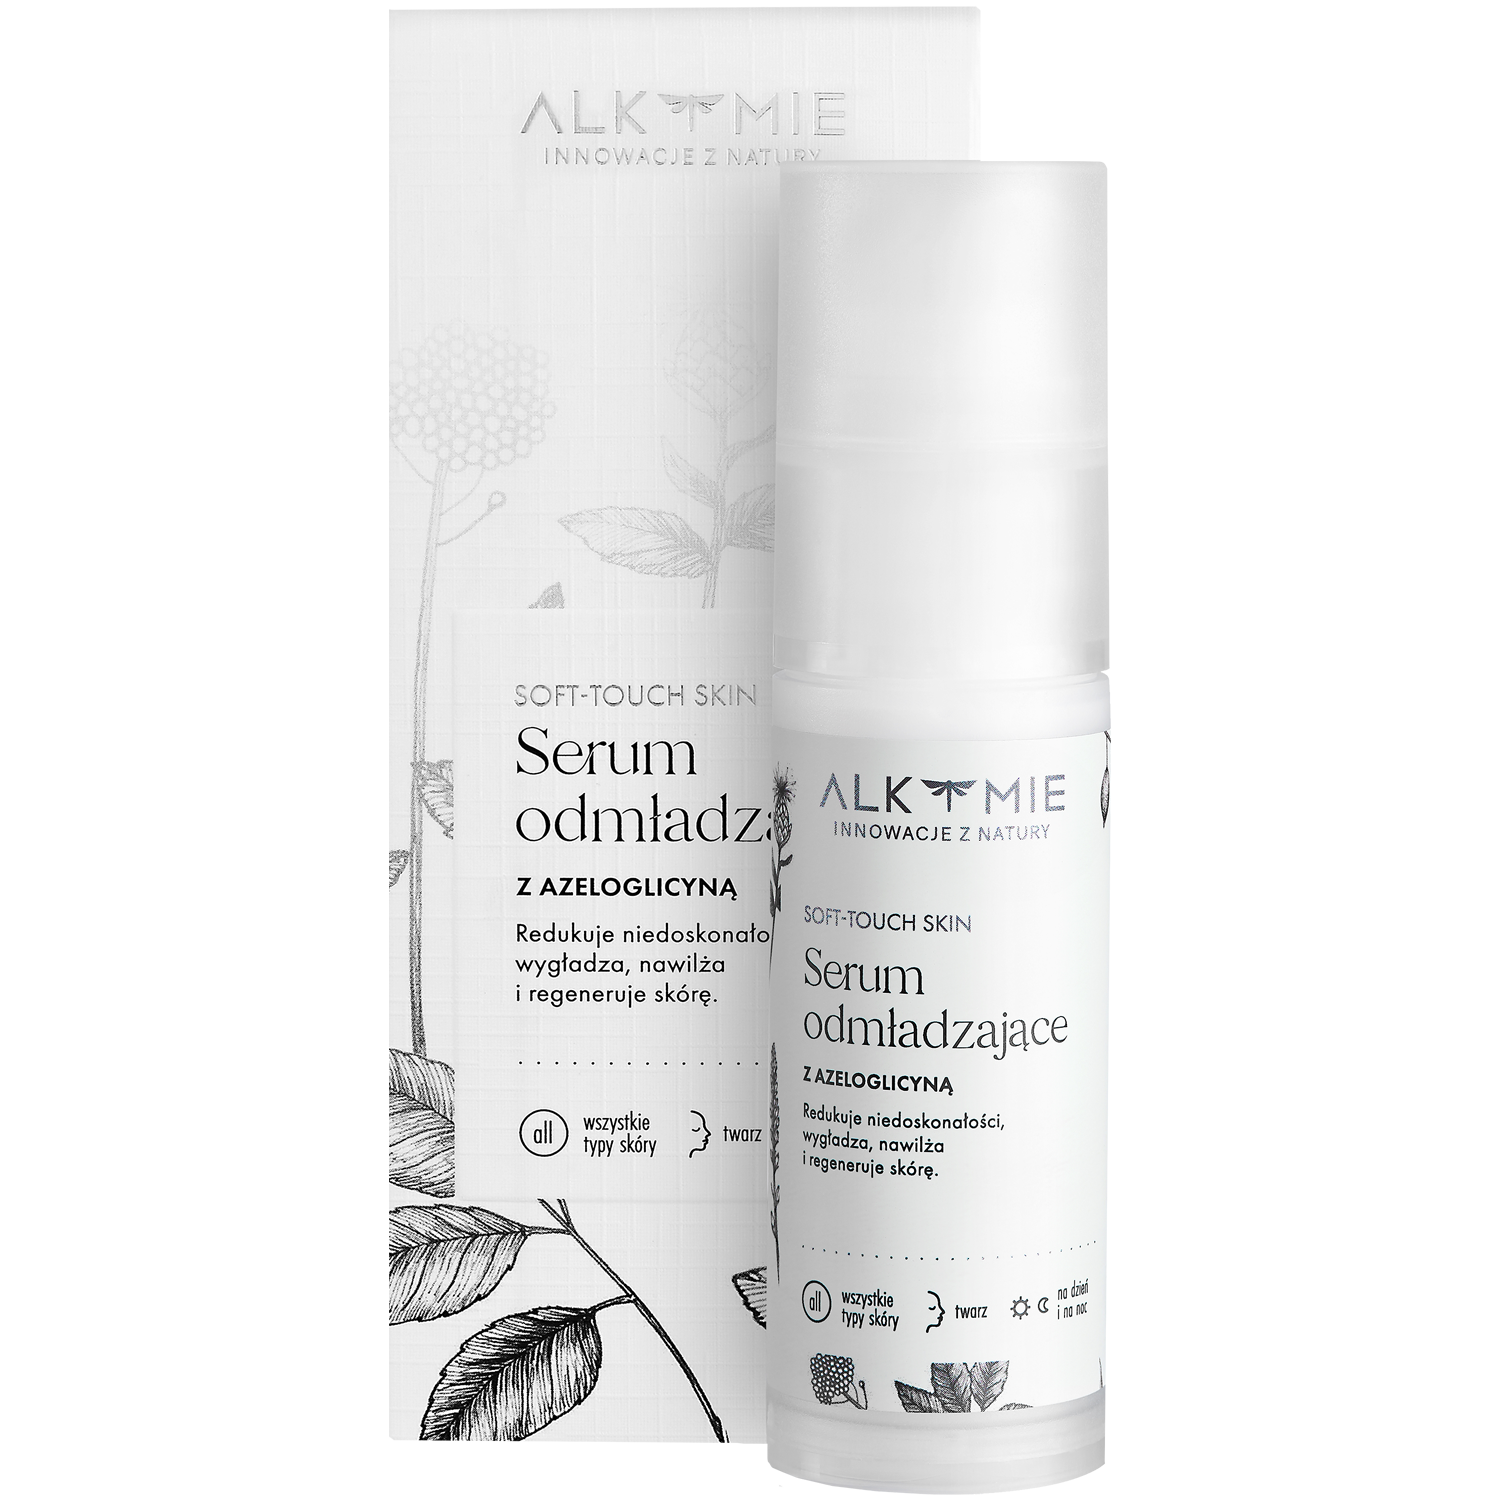 Alkmie Soft-touch Skin омолаживающая сыворотка для лица, 30 мл цена и фото